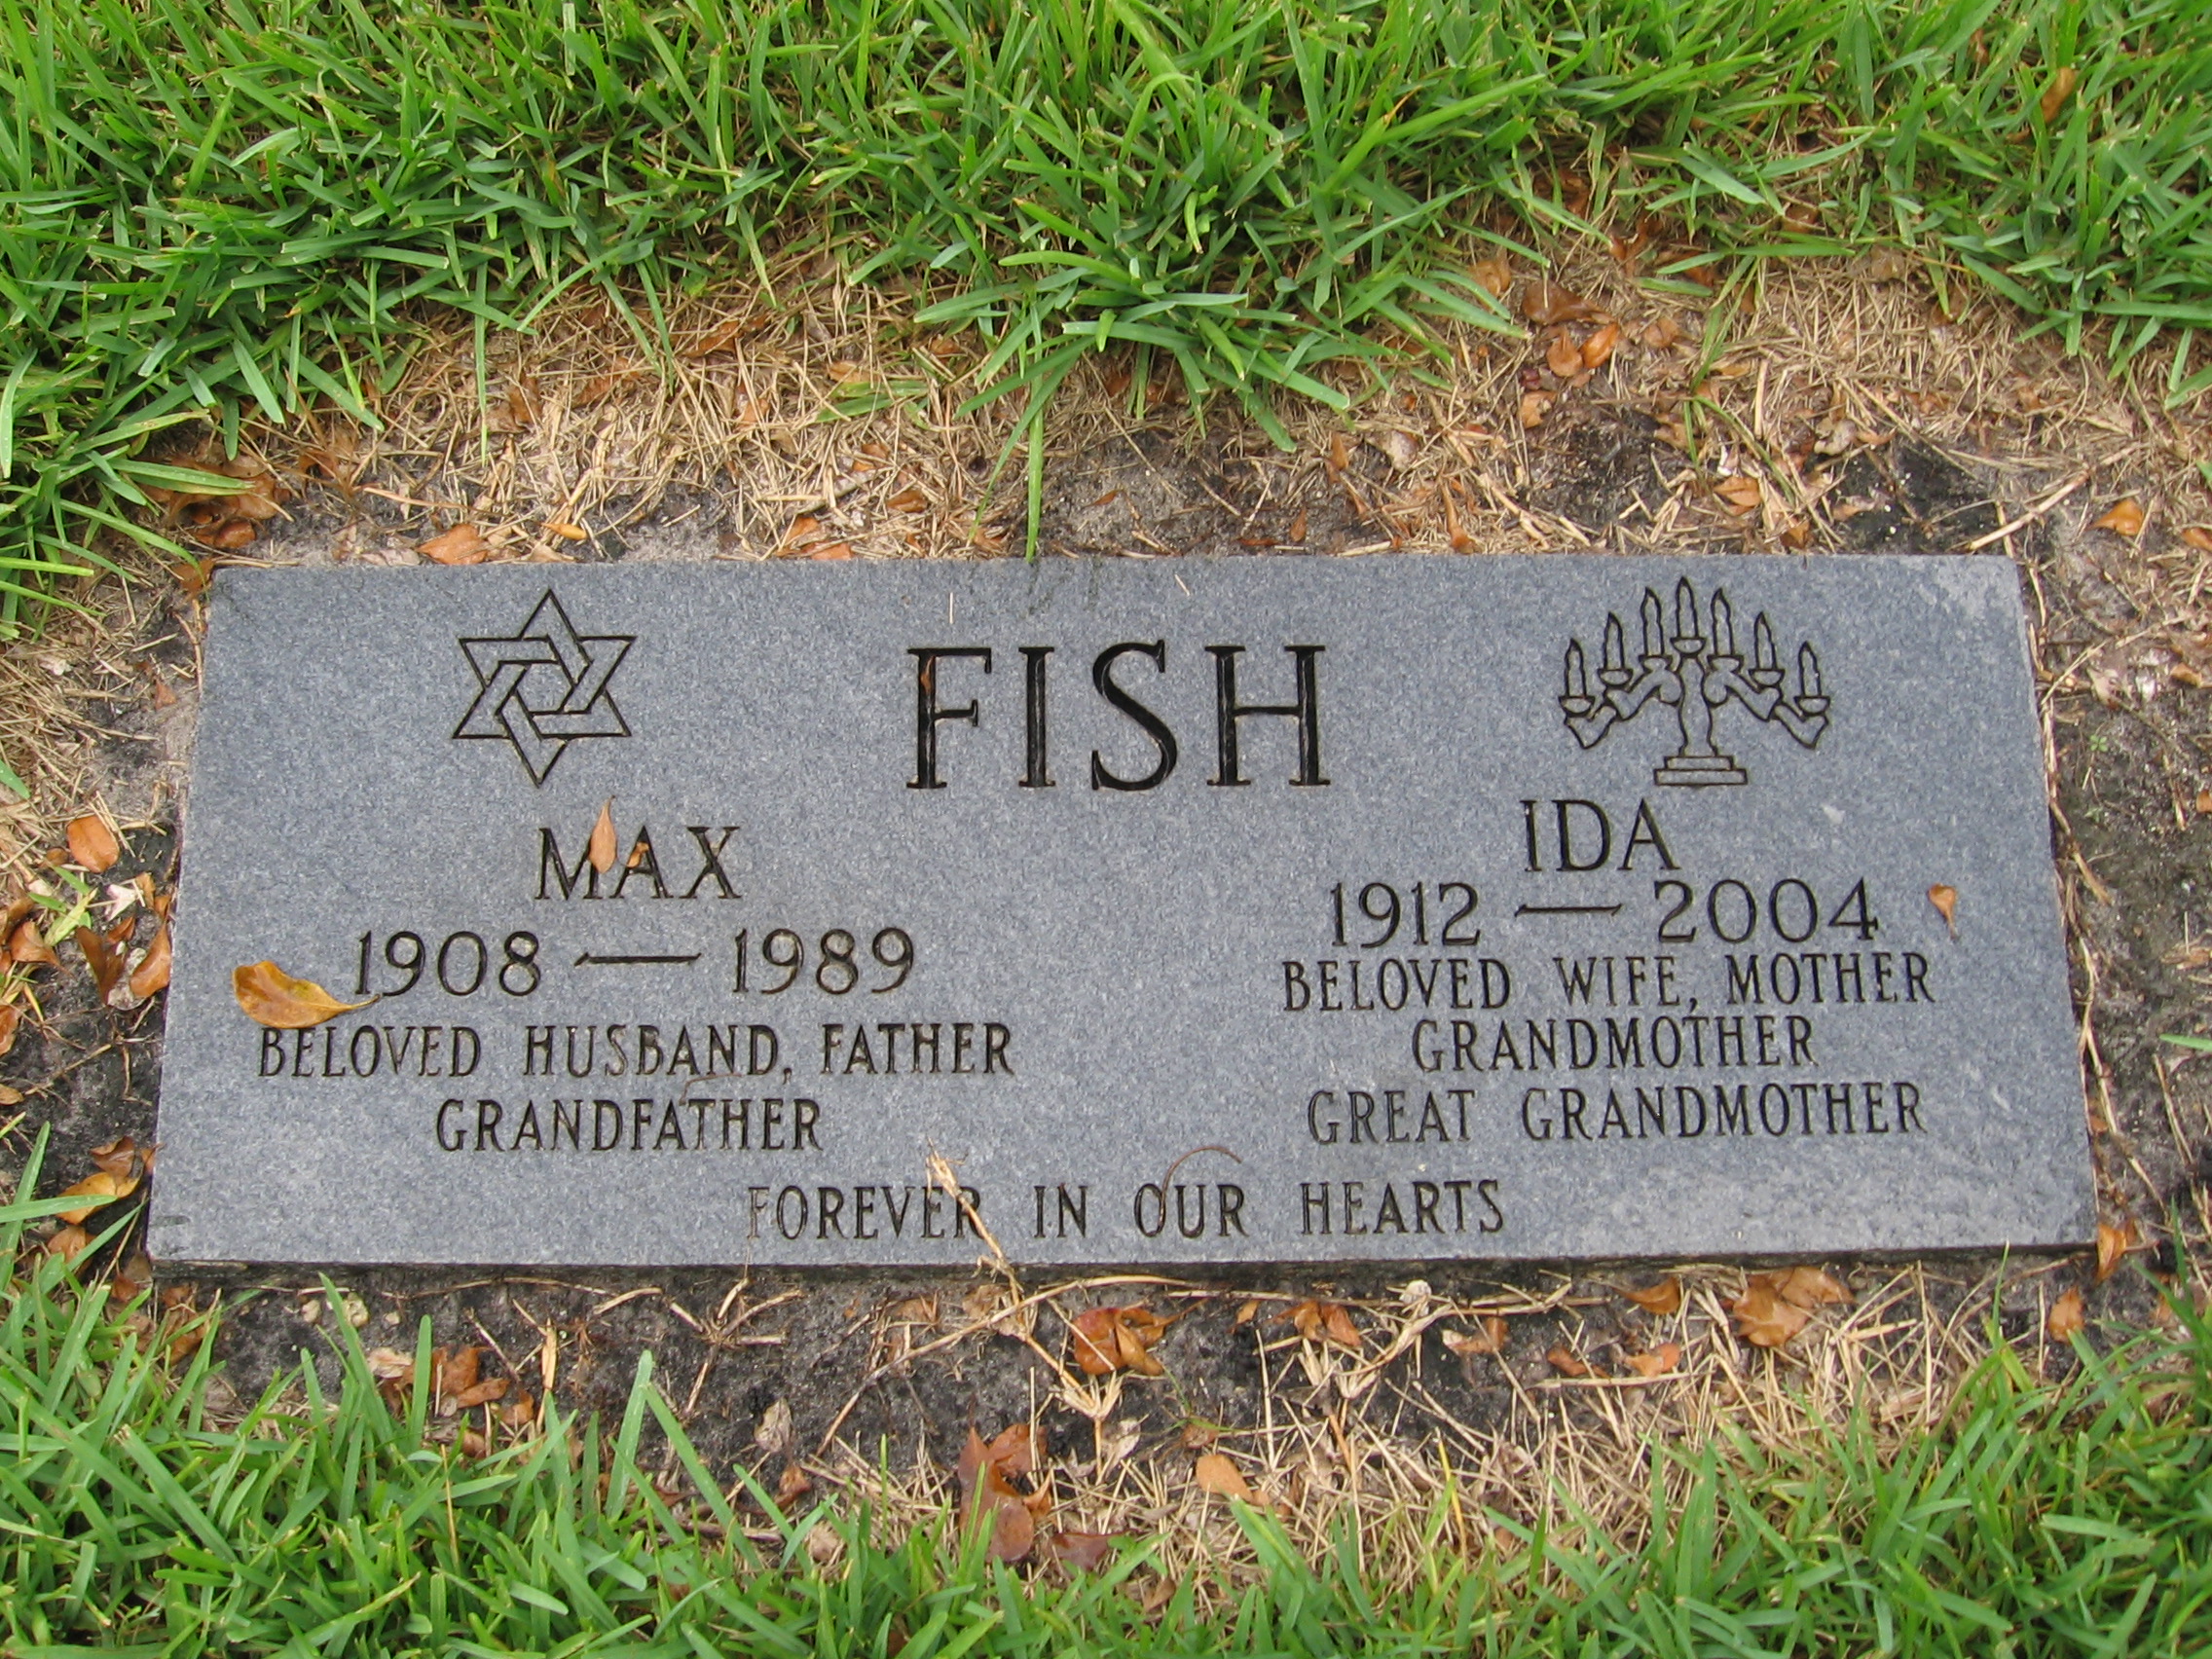 Max Fish